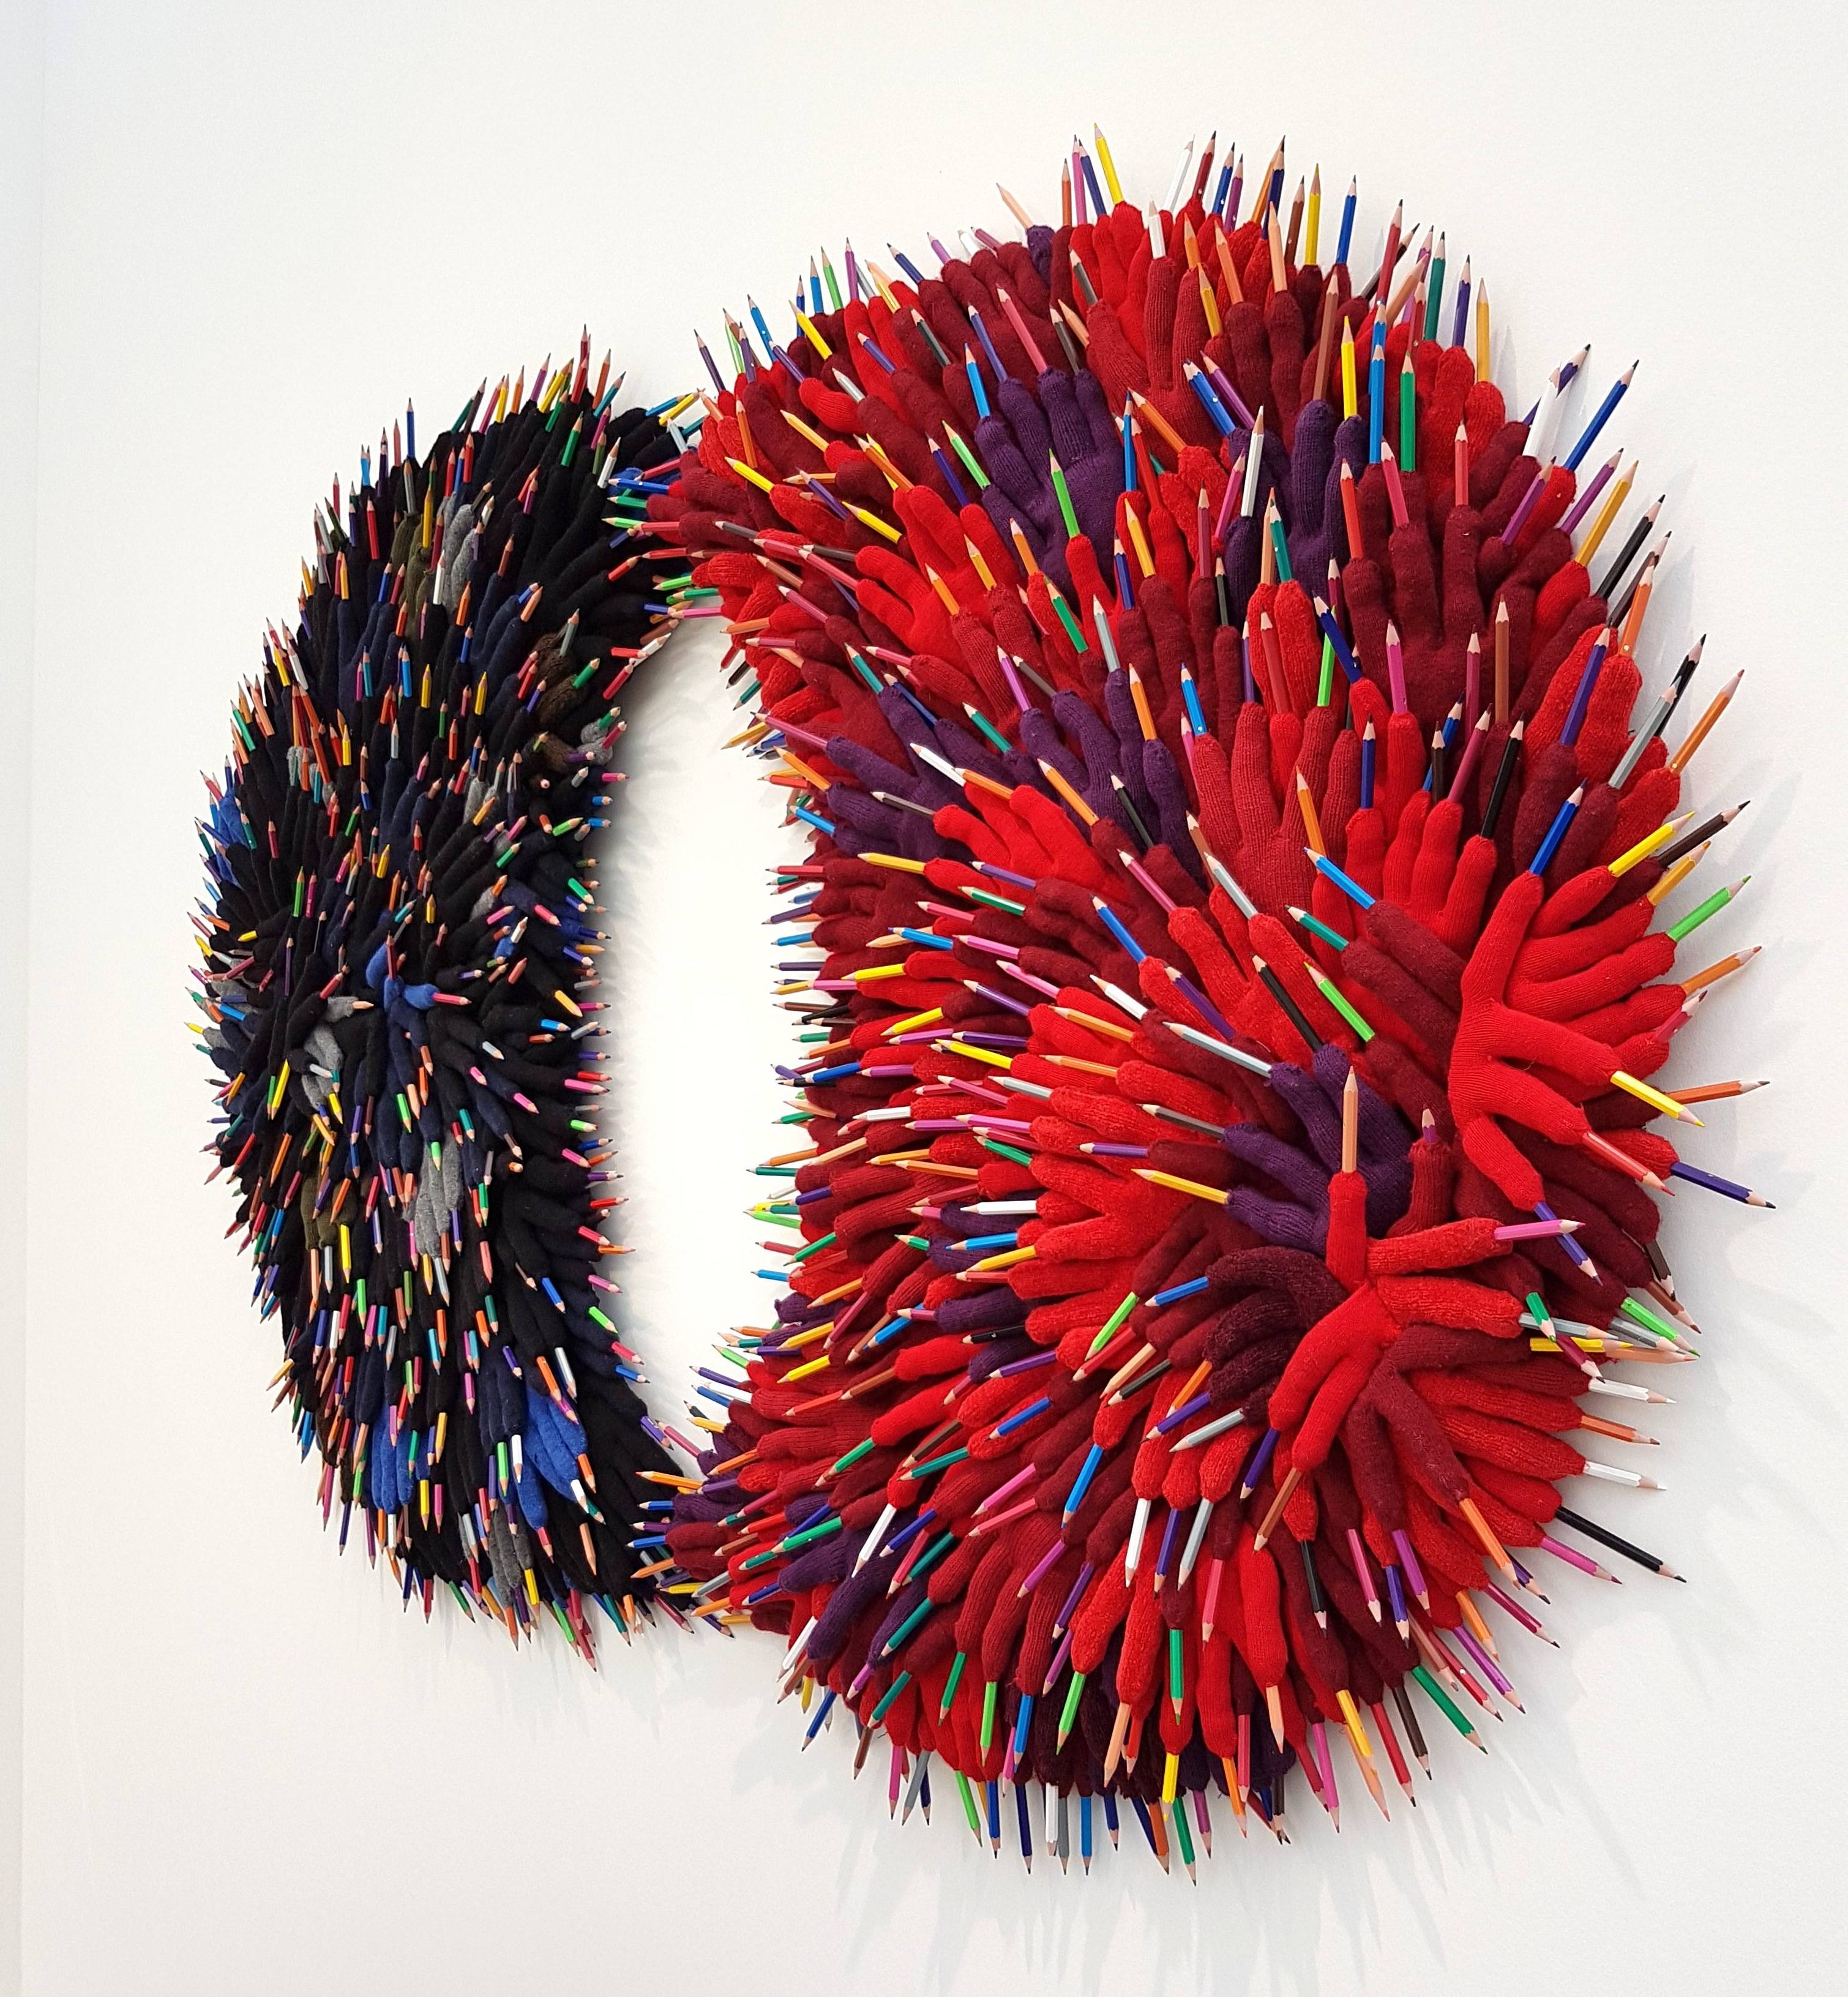 Annette Messager, Discours amoureux, 2017. Gloves and pencils, 115 x 180 x 12 cm